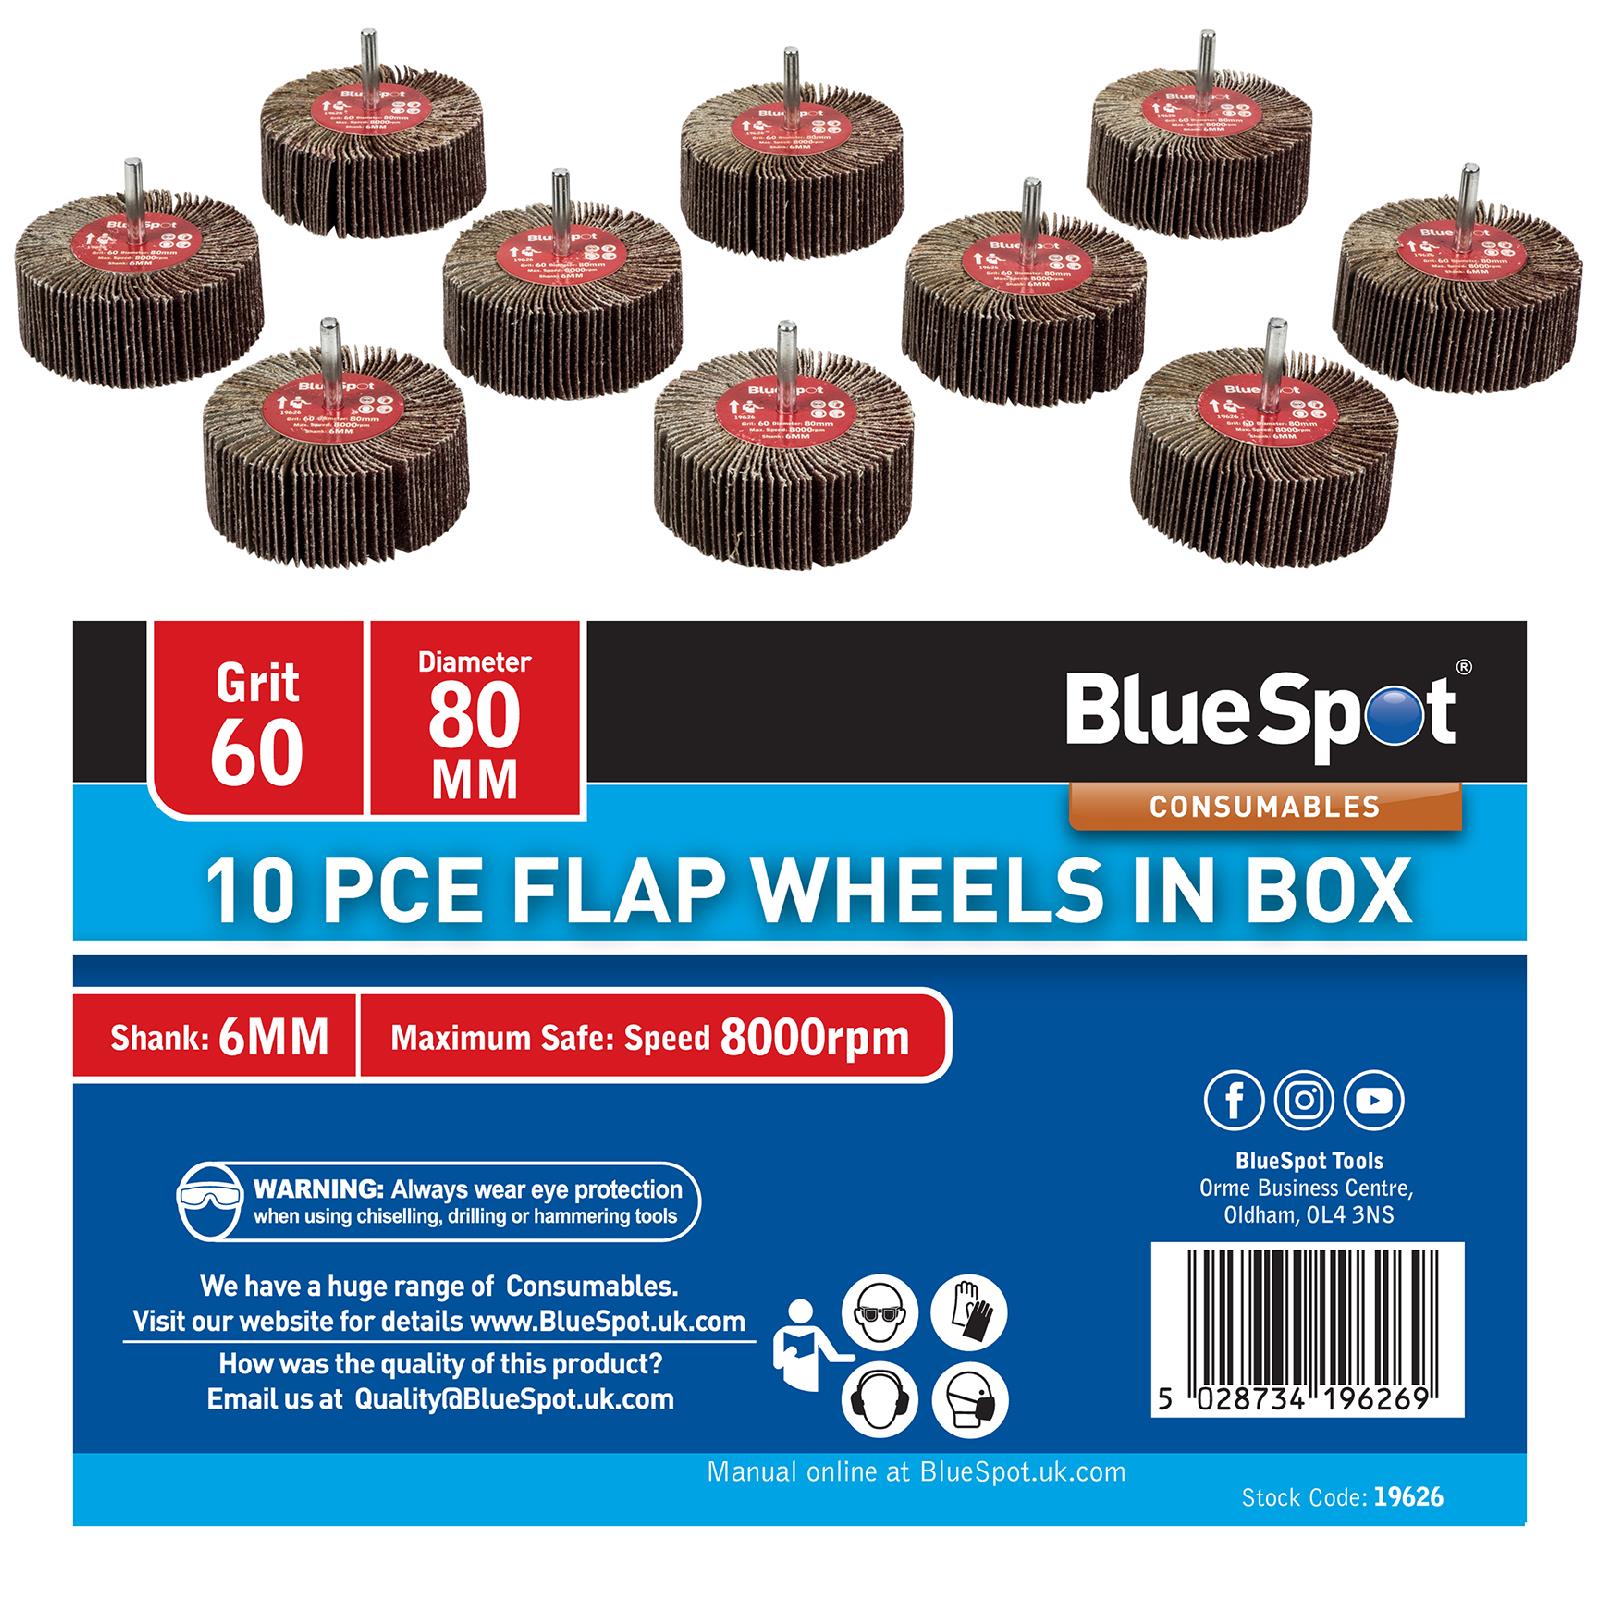 BlueSpot Flap Wheels In Box 10 Pieces 60 Grit 80mm